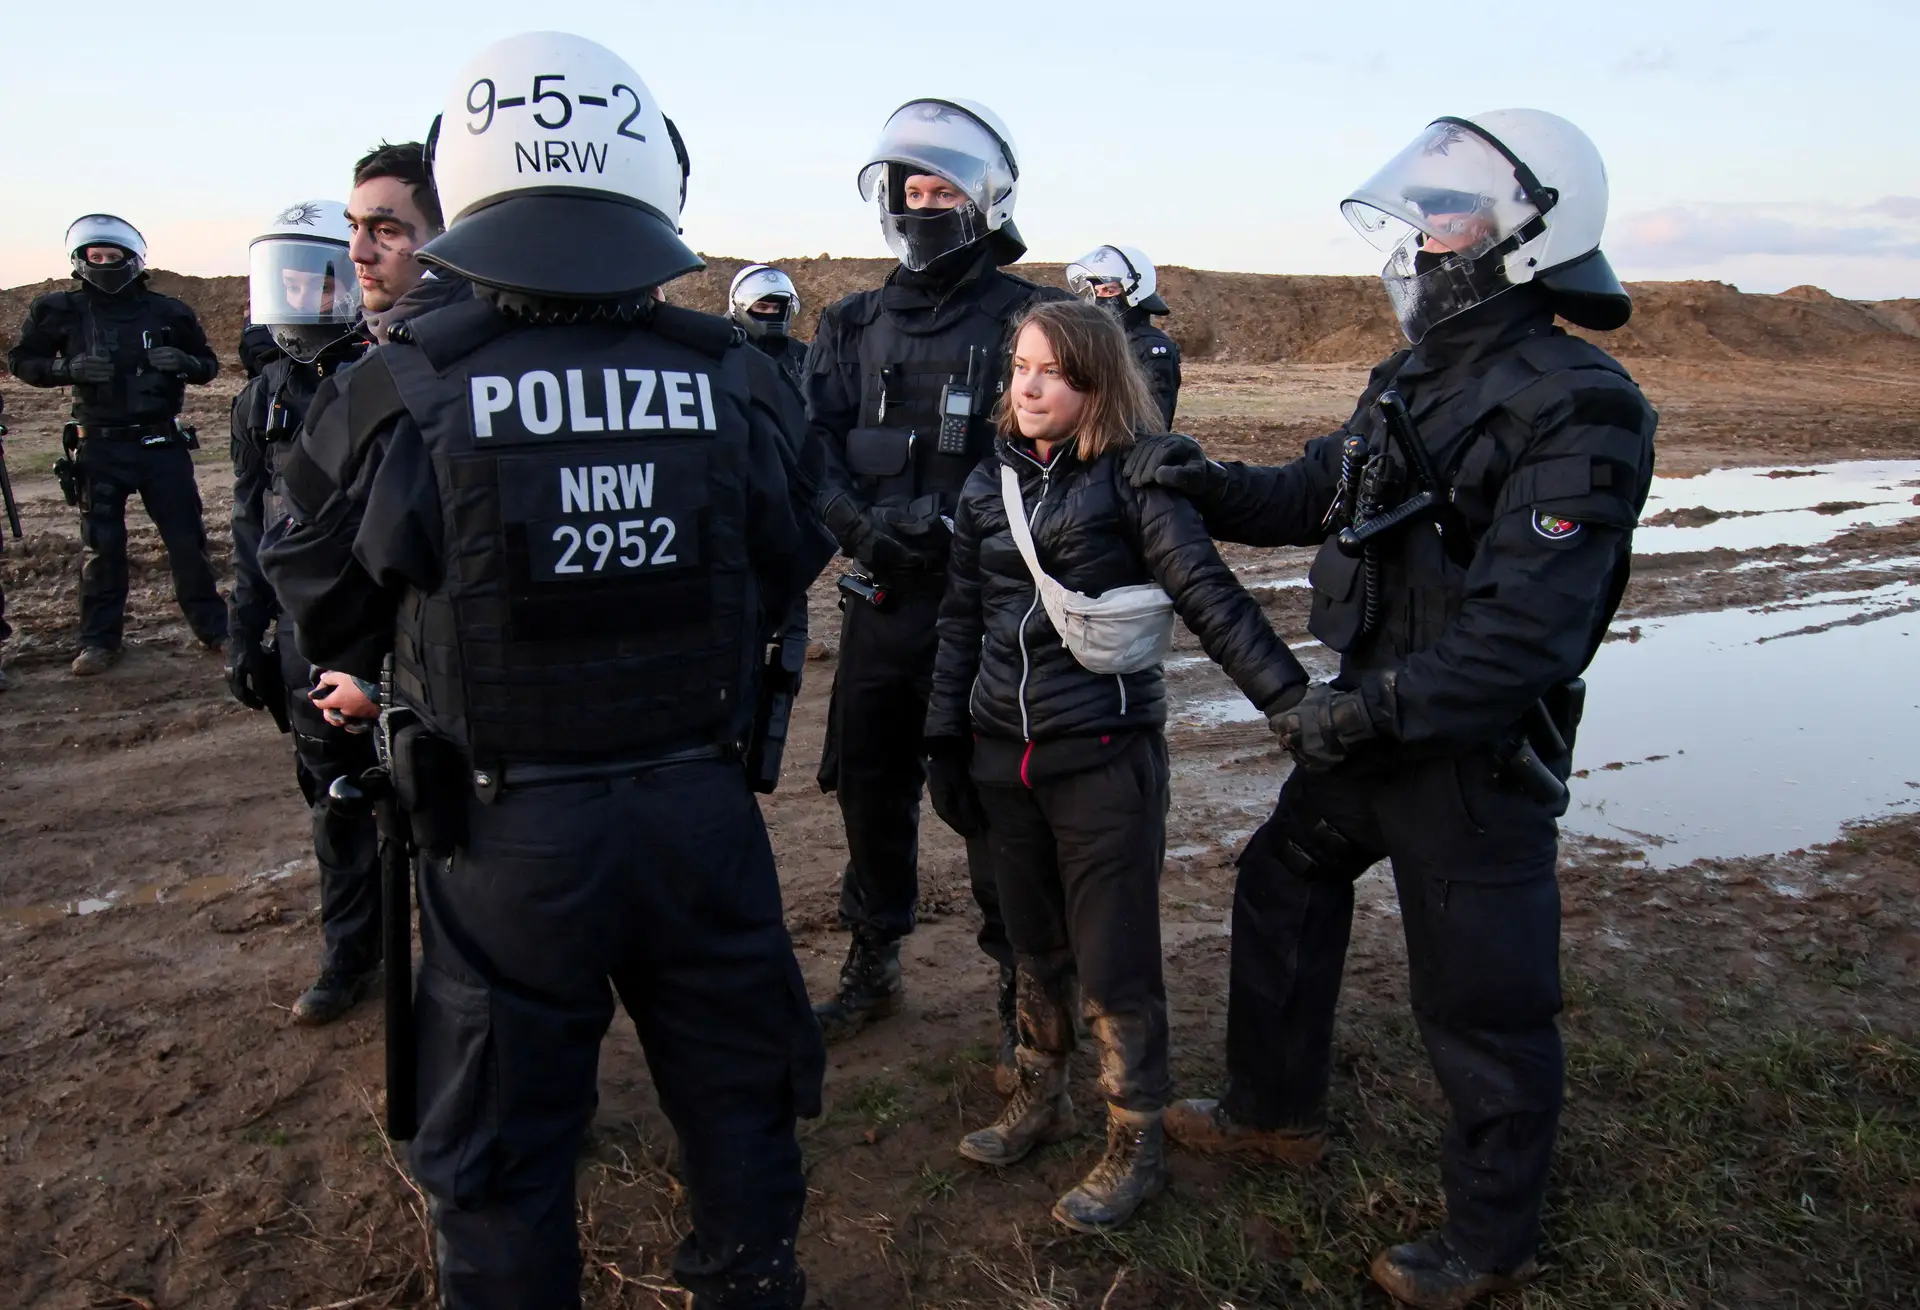 Greta Thunberg arrested at a coal mine demonstration